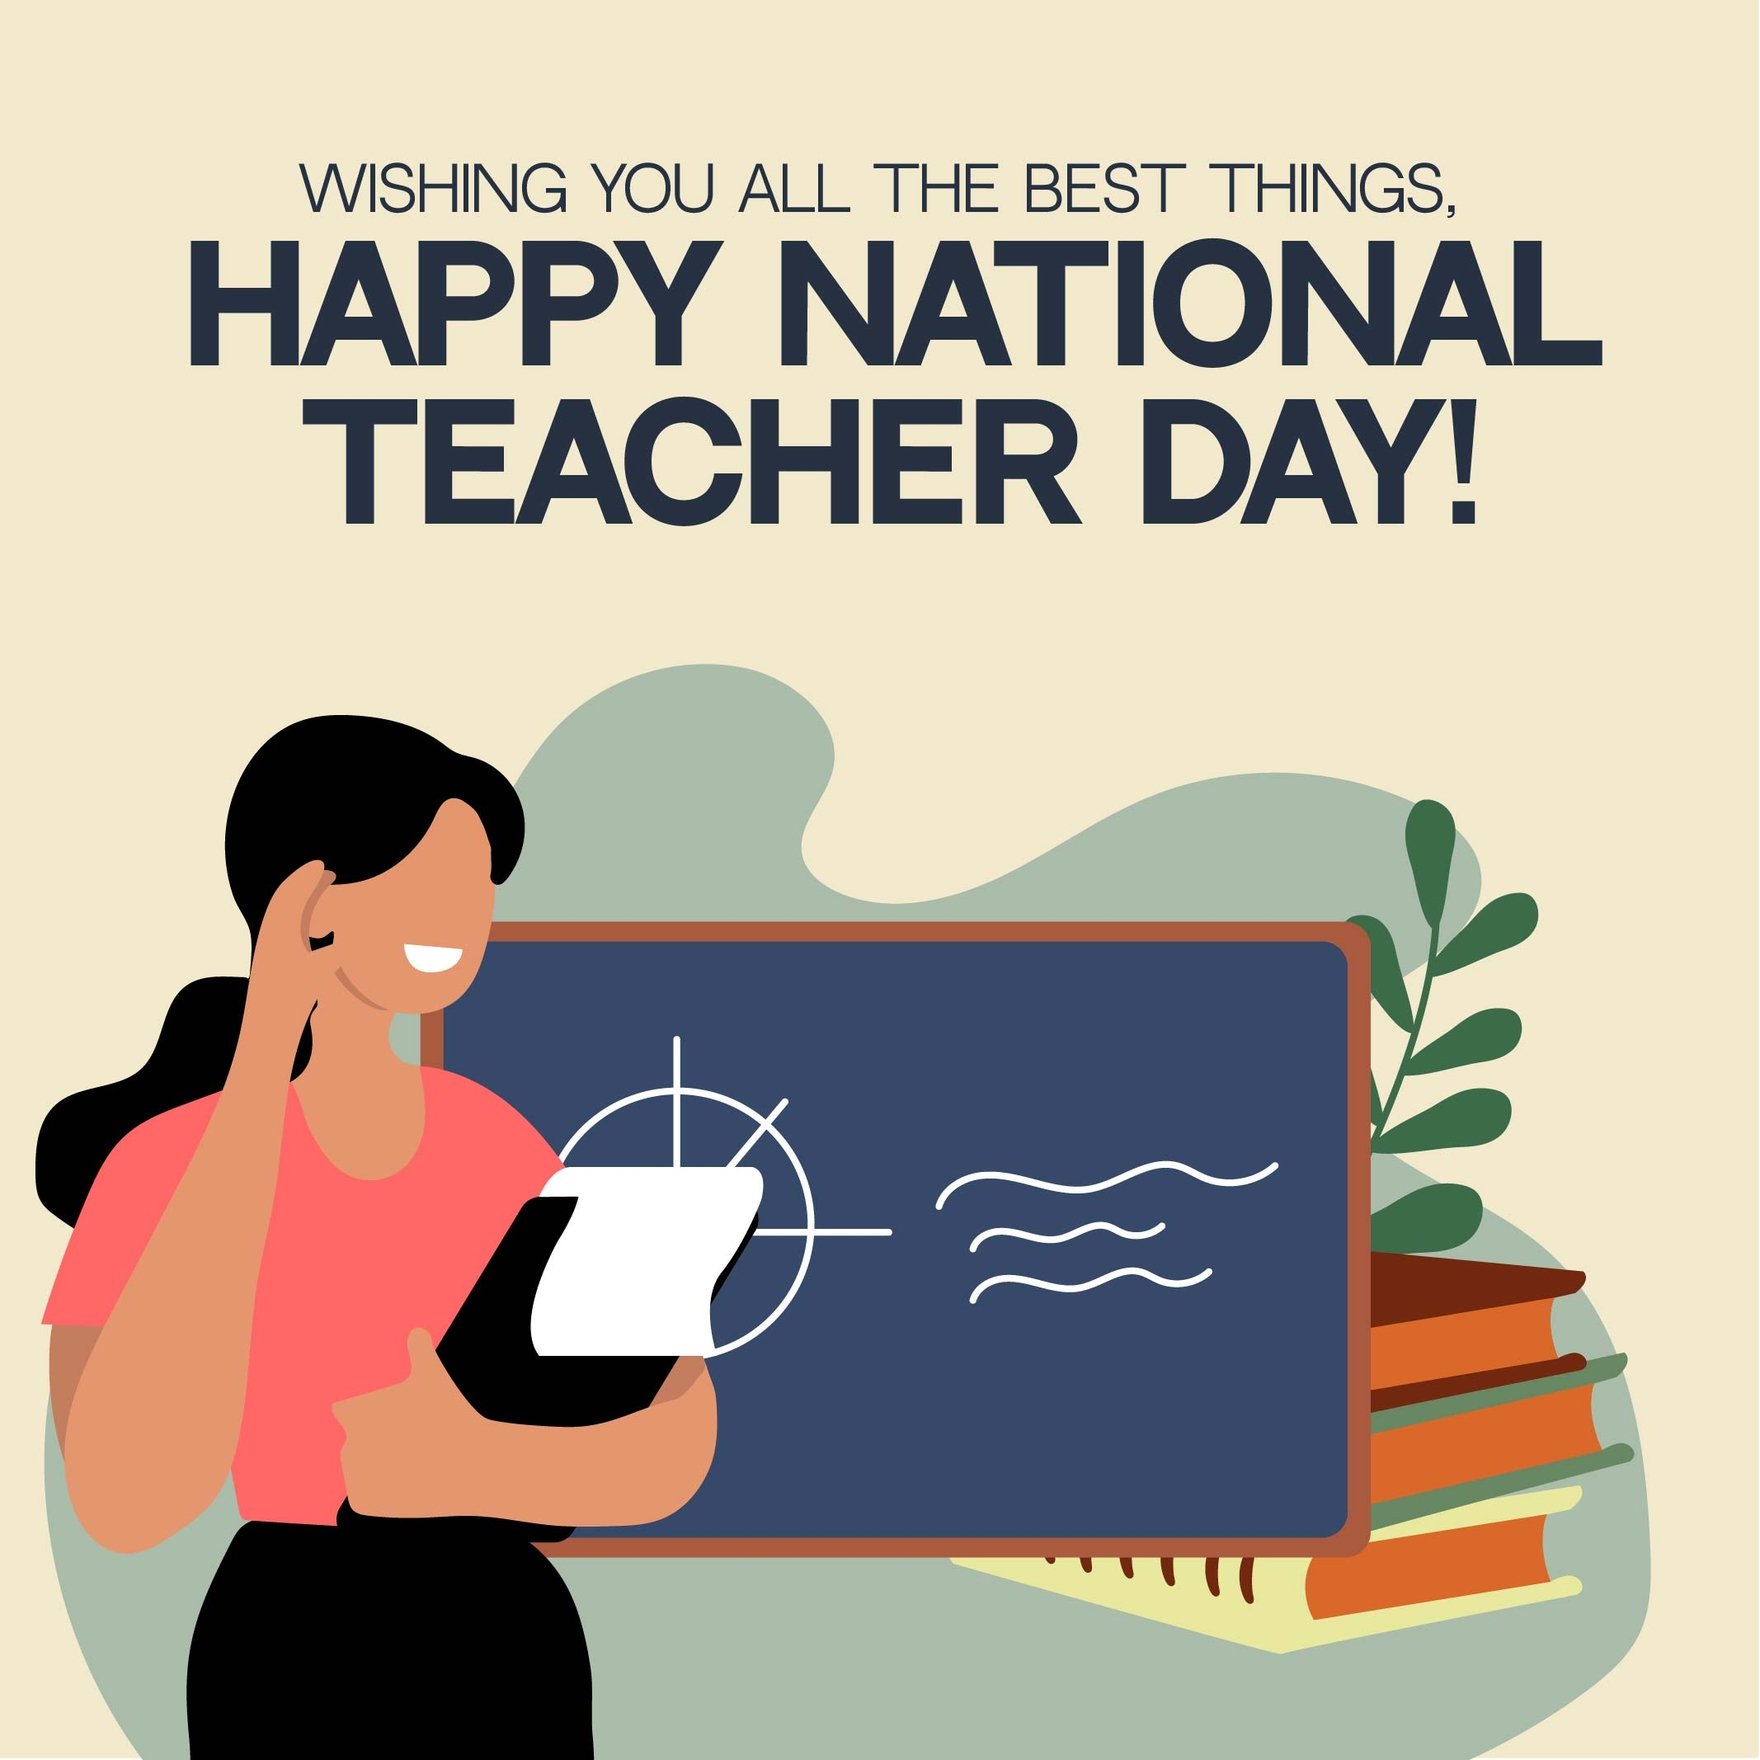 National Teacher Day Wishes Vector in Illustrator, PSD, EPS, SVG, JPG, PNG